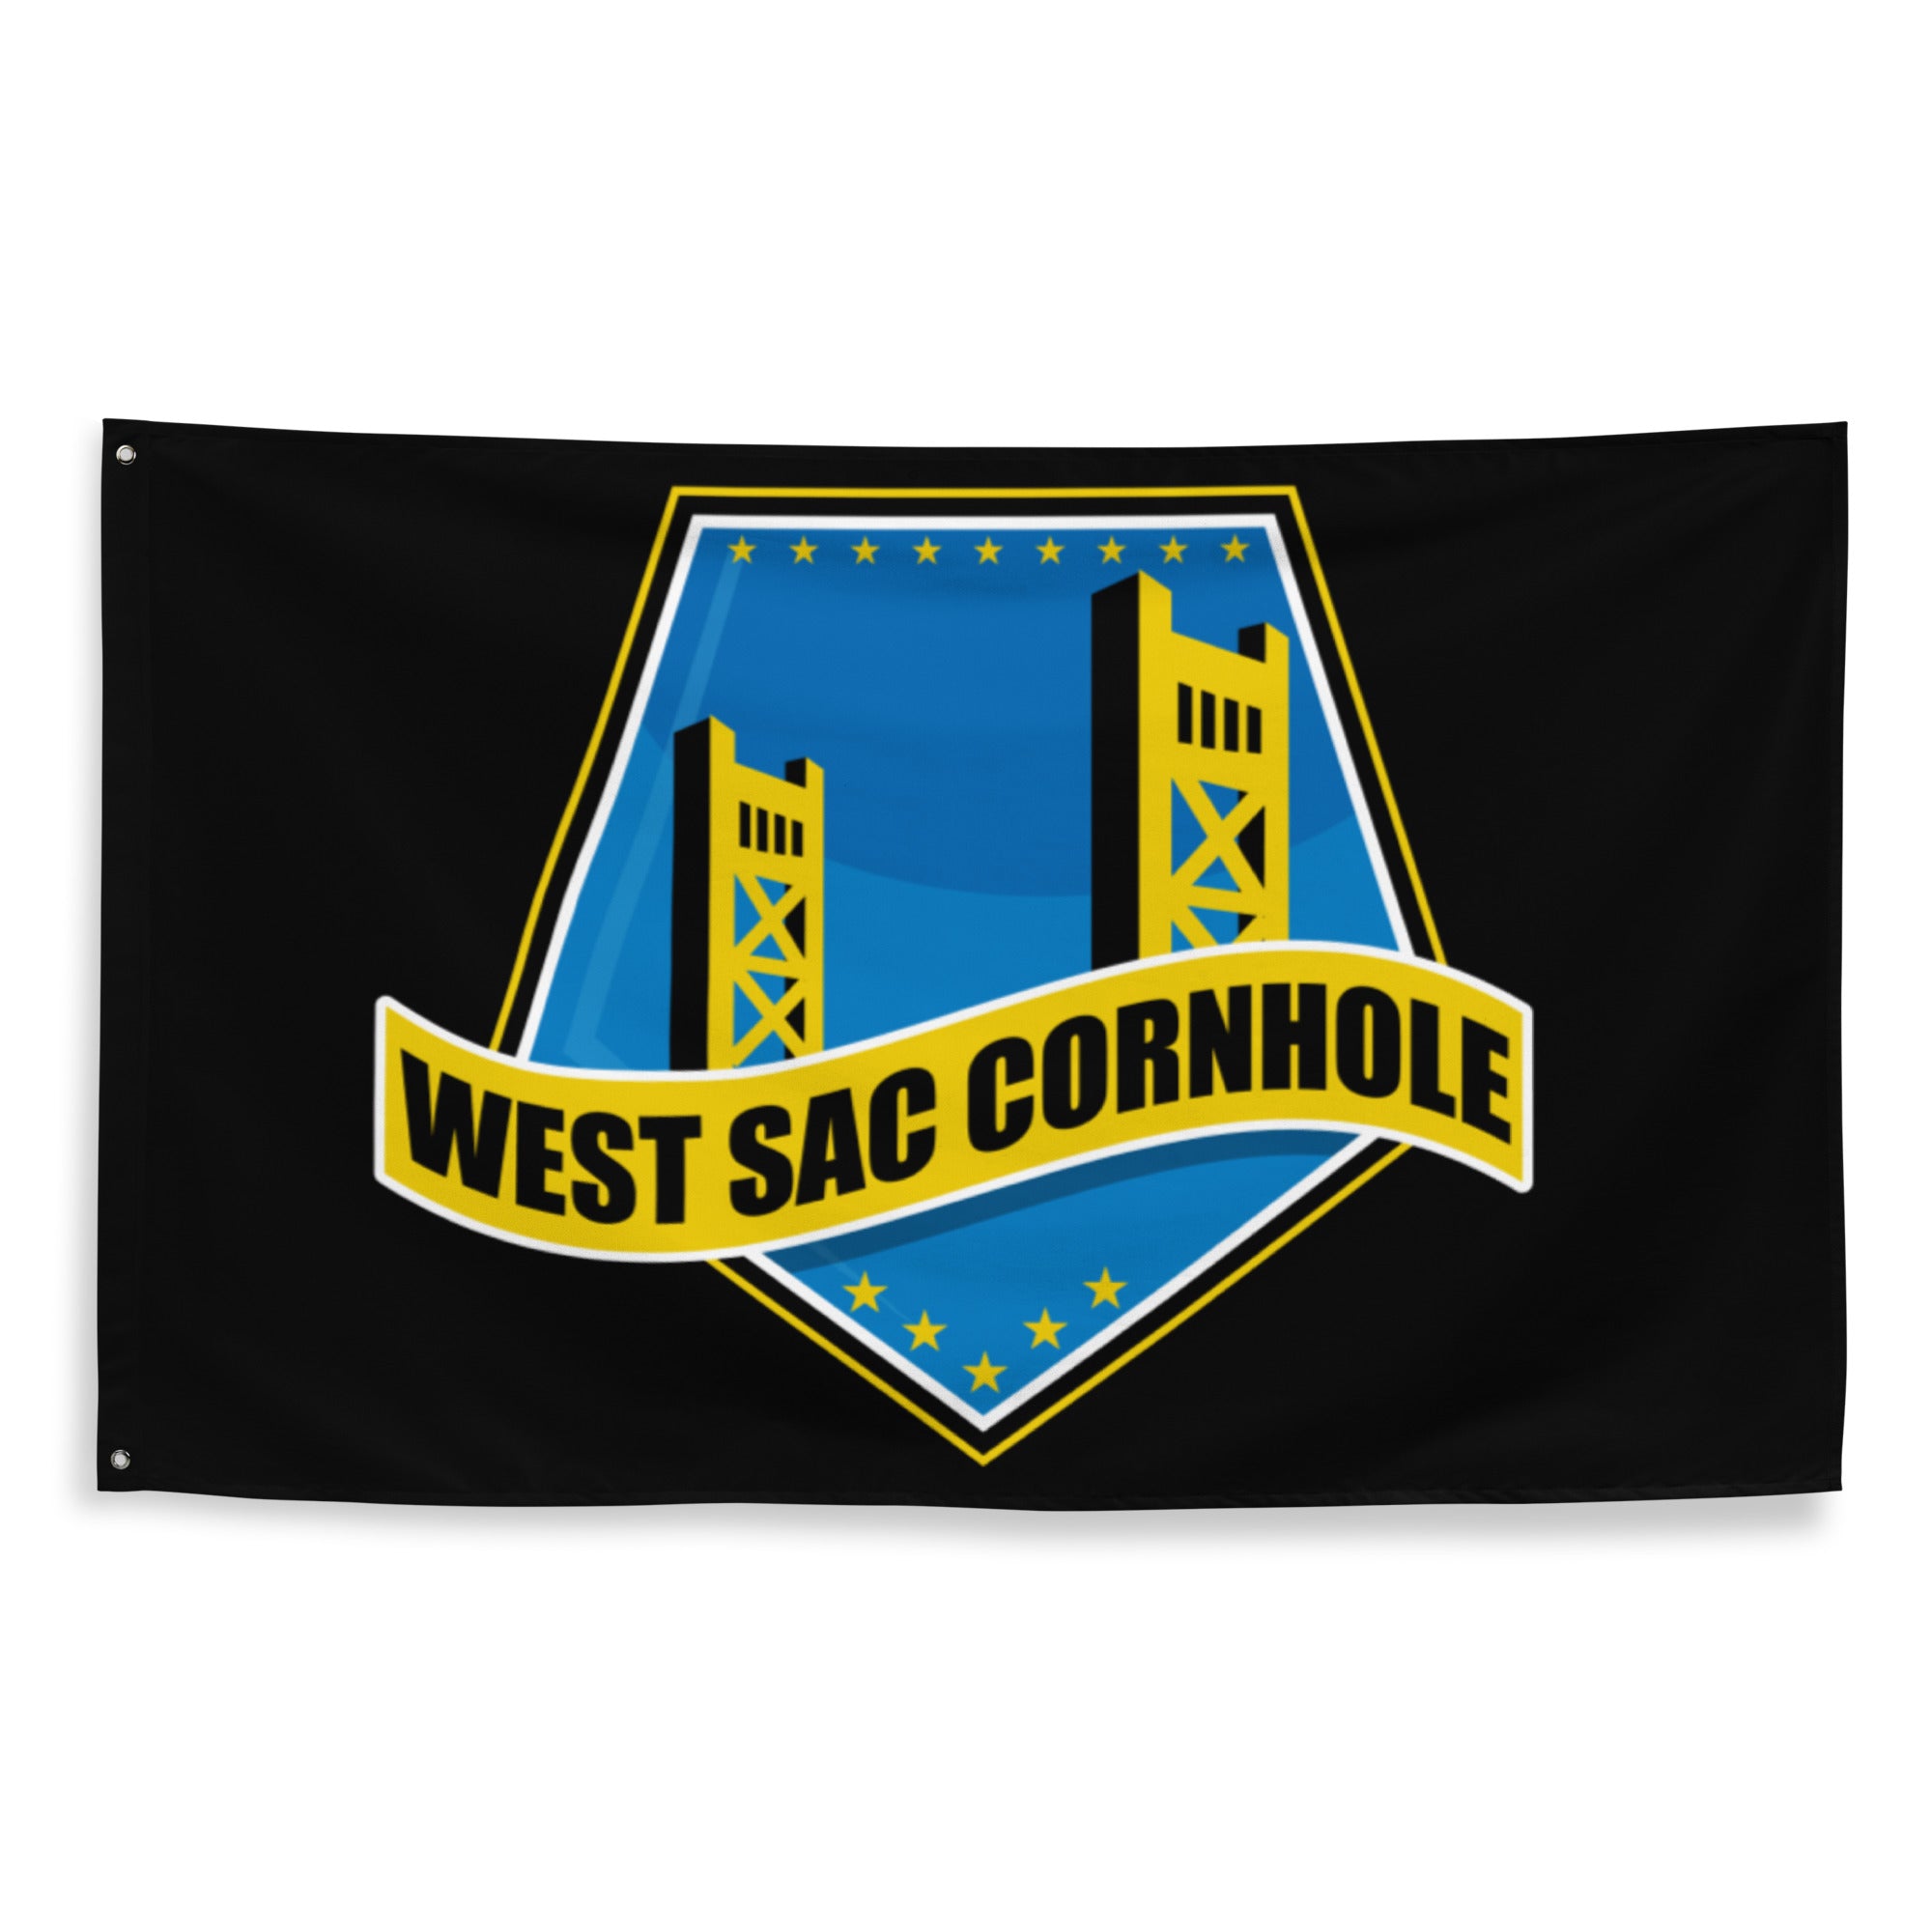 WSC Men's slides – West Sac Cornhole